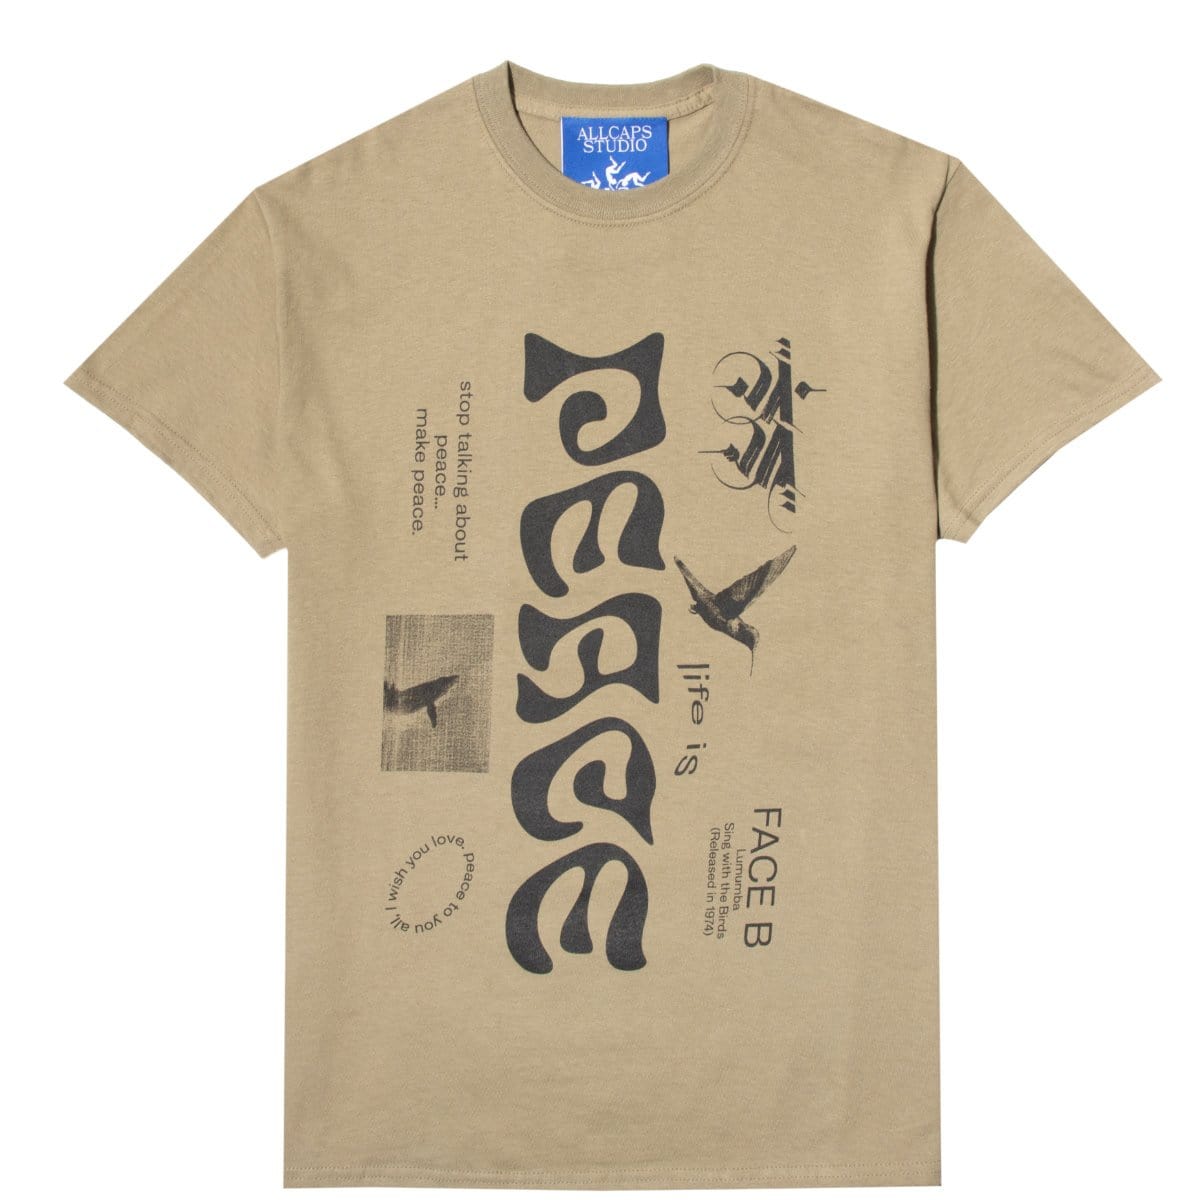 ALLCAPSTUDIO T-Shirts LUMUMBA T-SHIRT